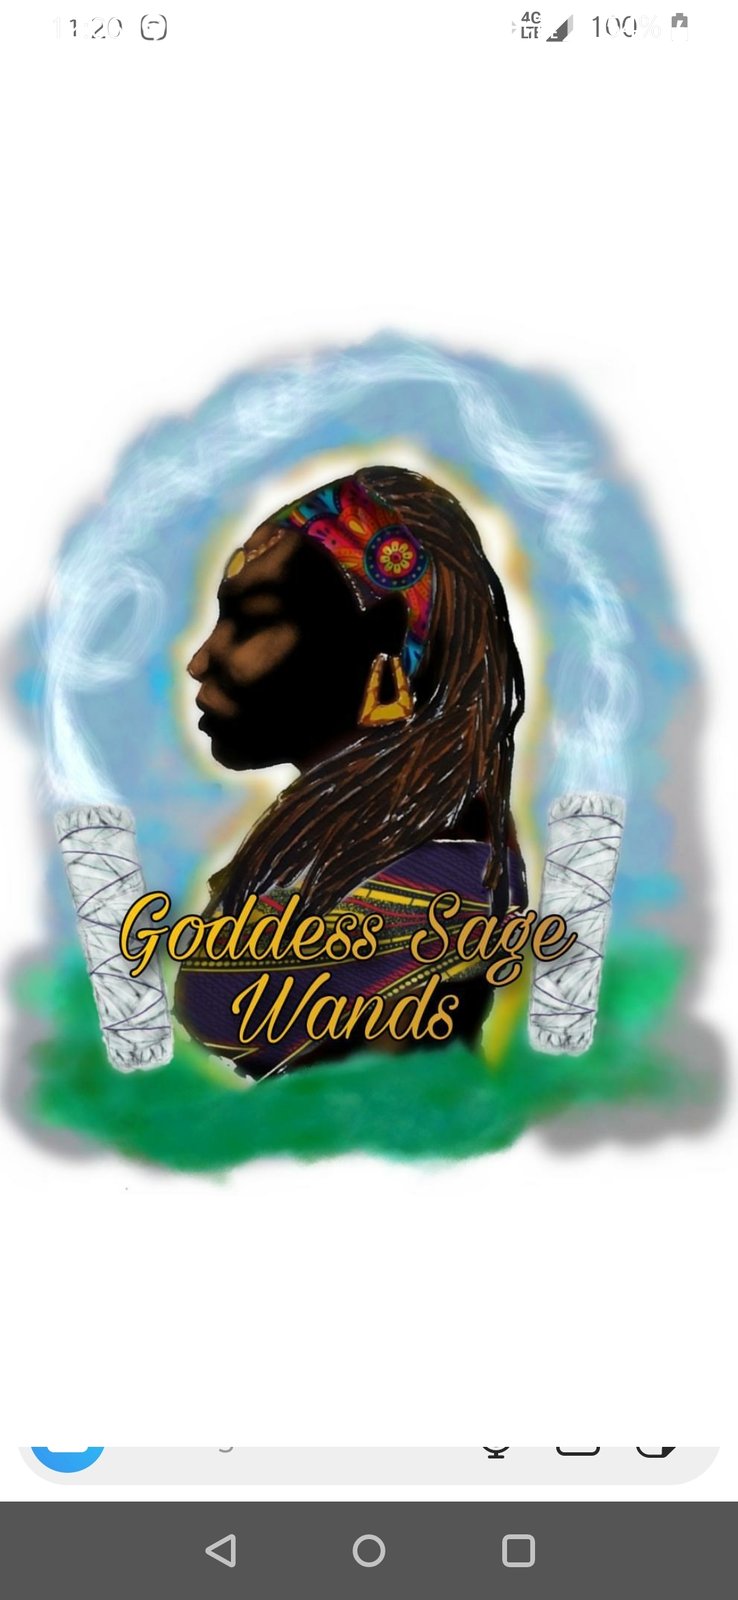 Goddess Sage Goddess Wands's account image